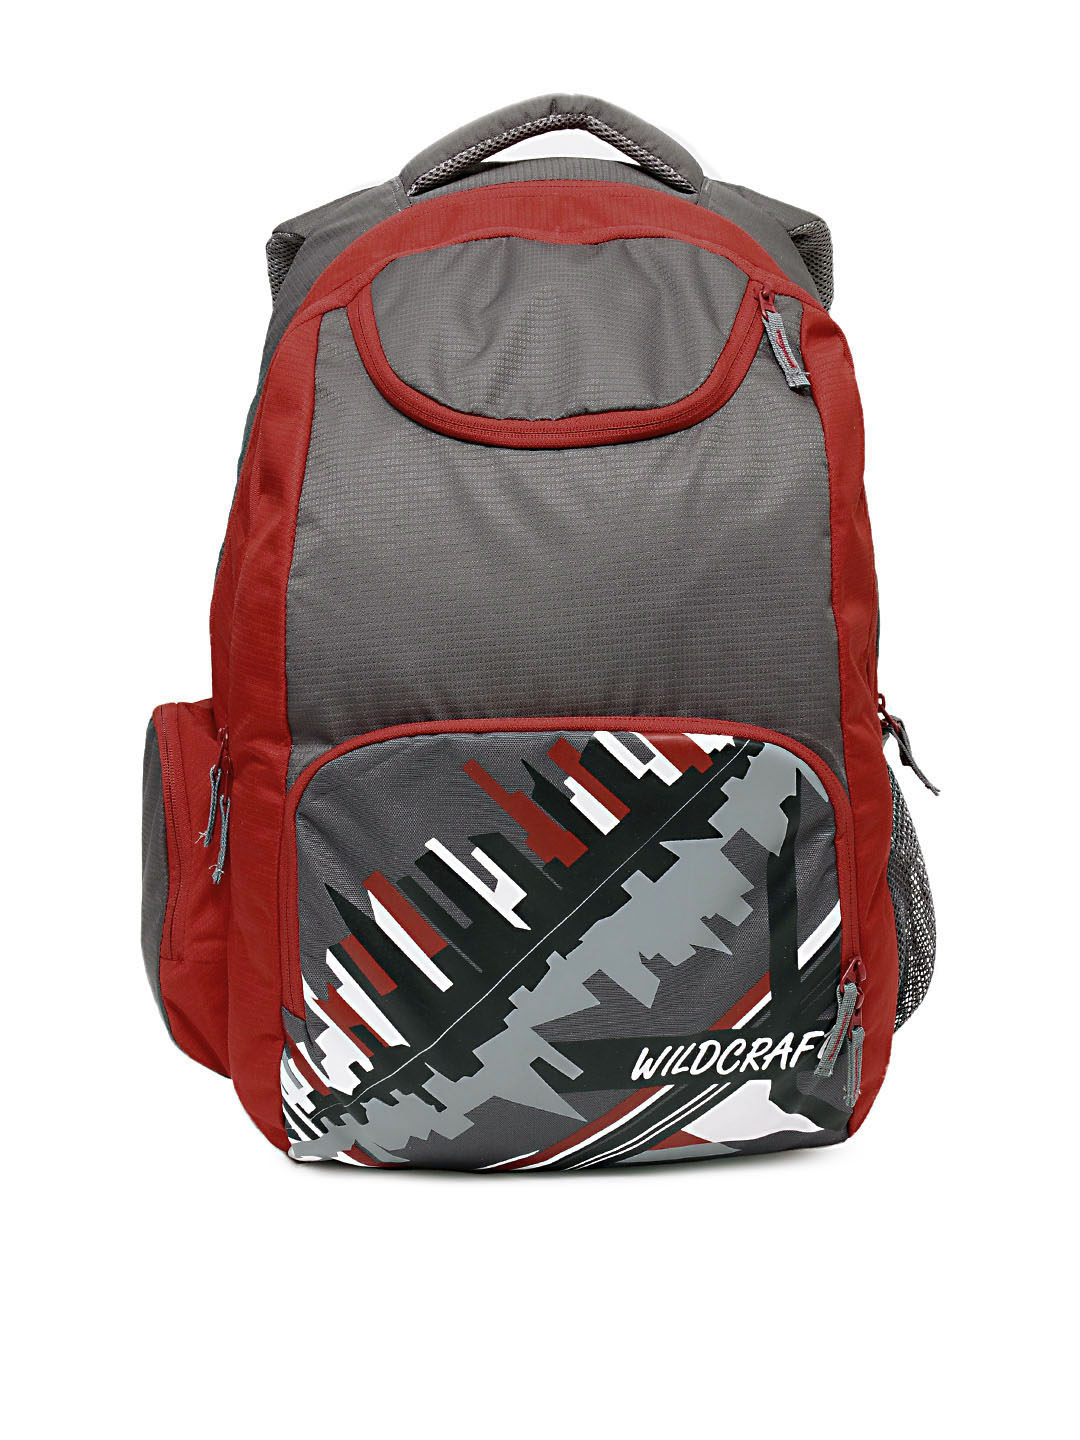 Wildcraft Unisex Grey & Red Backpack